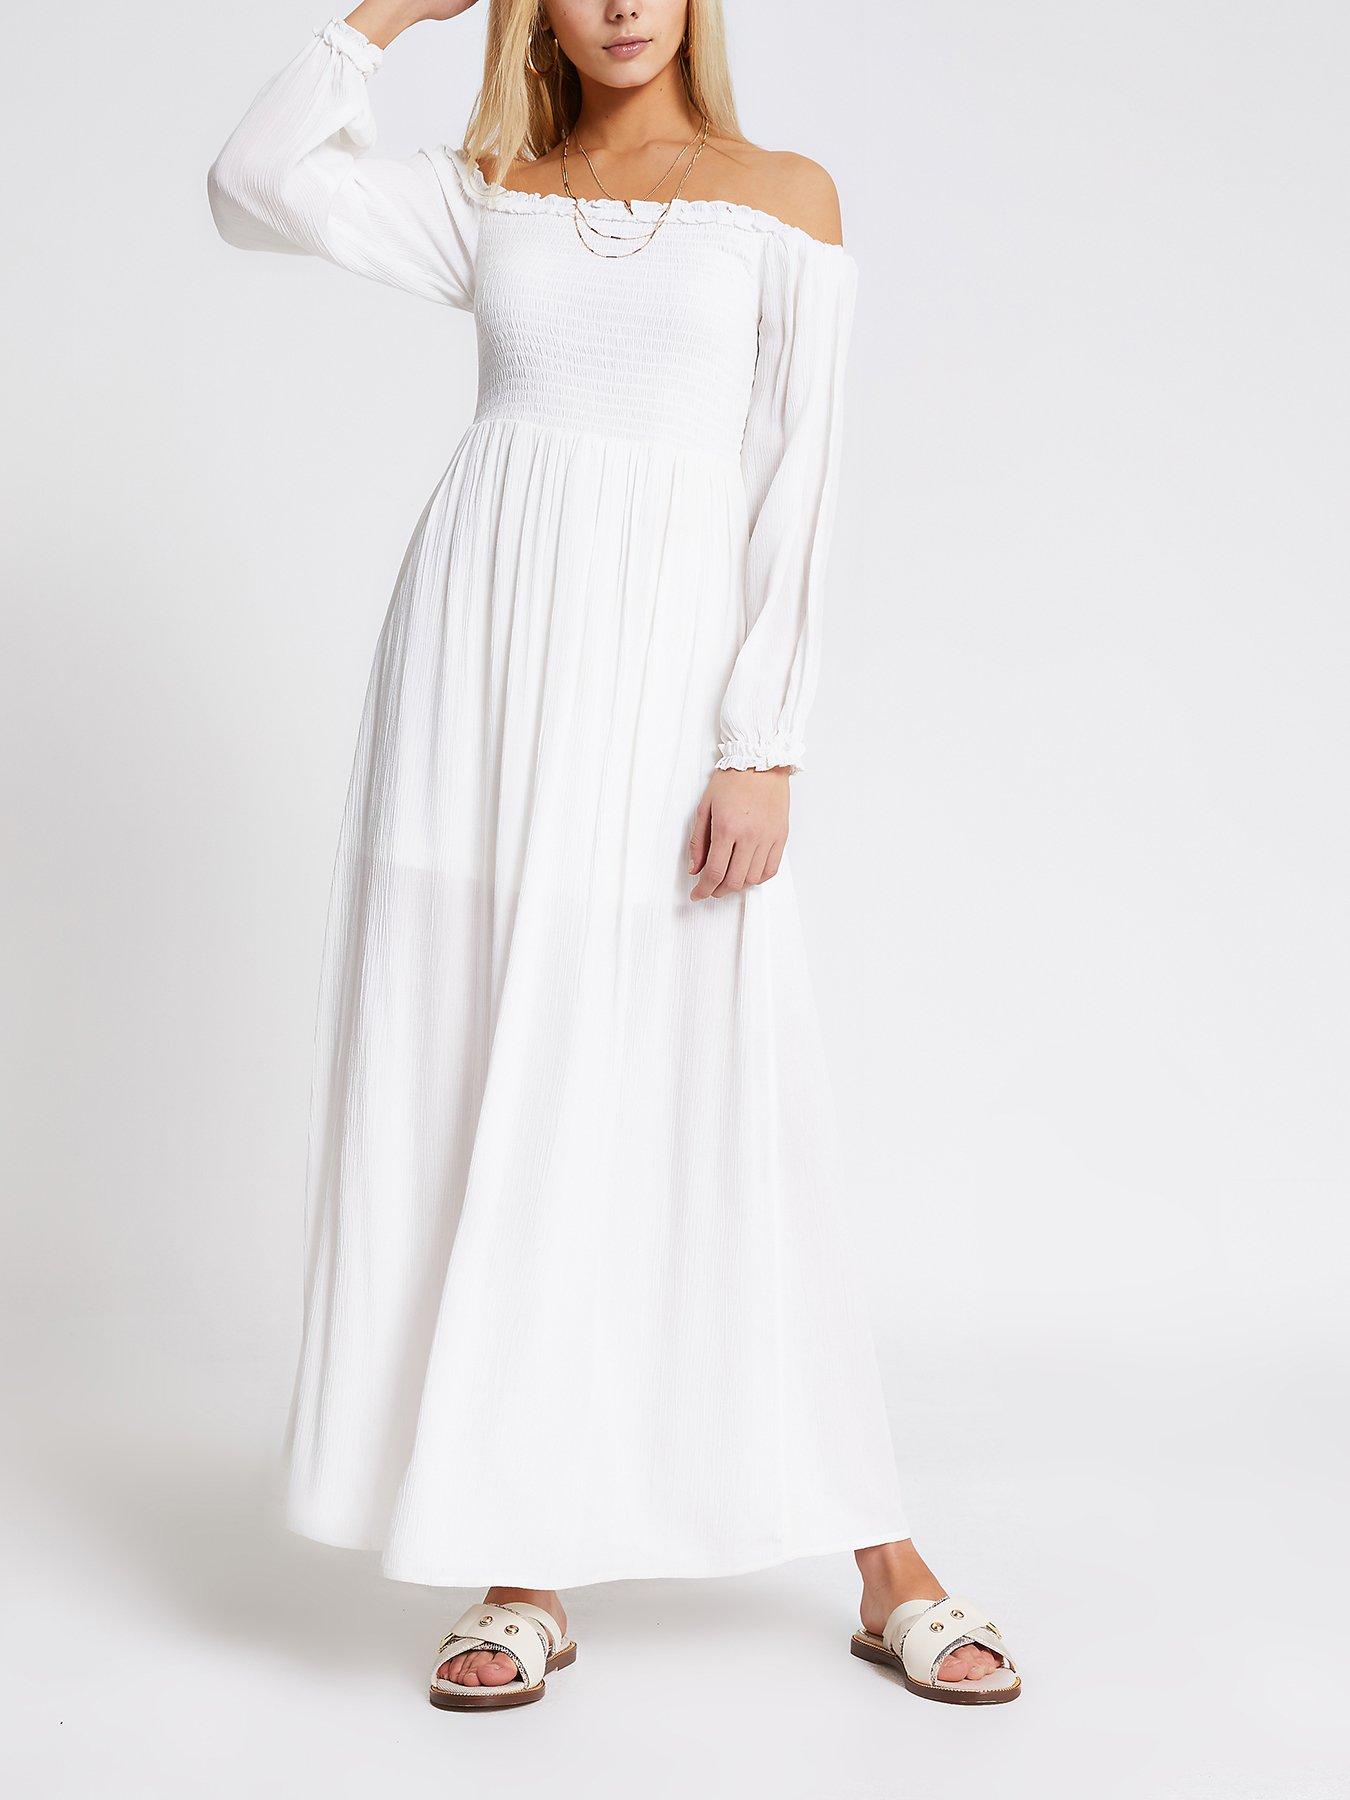 white island dress